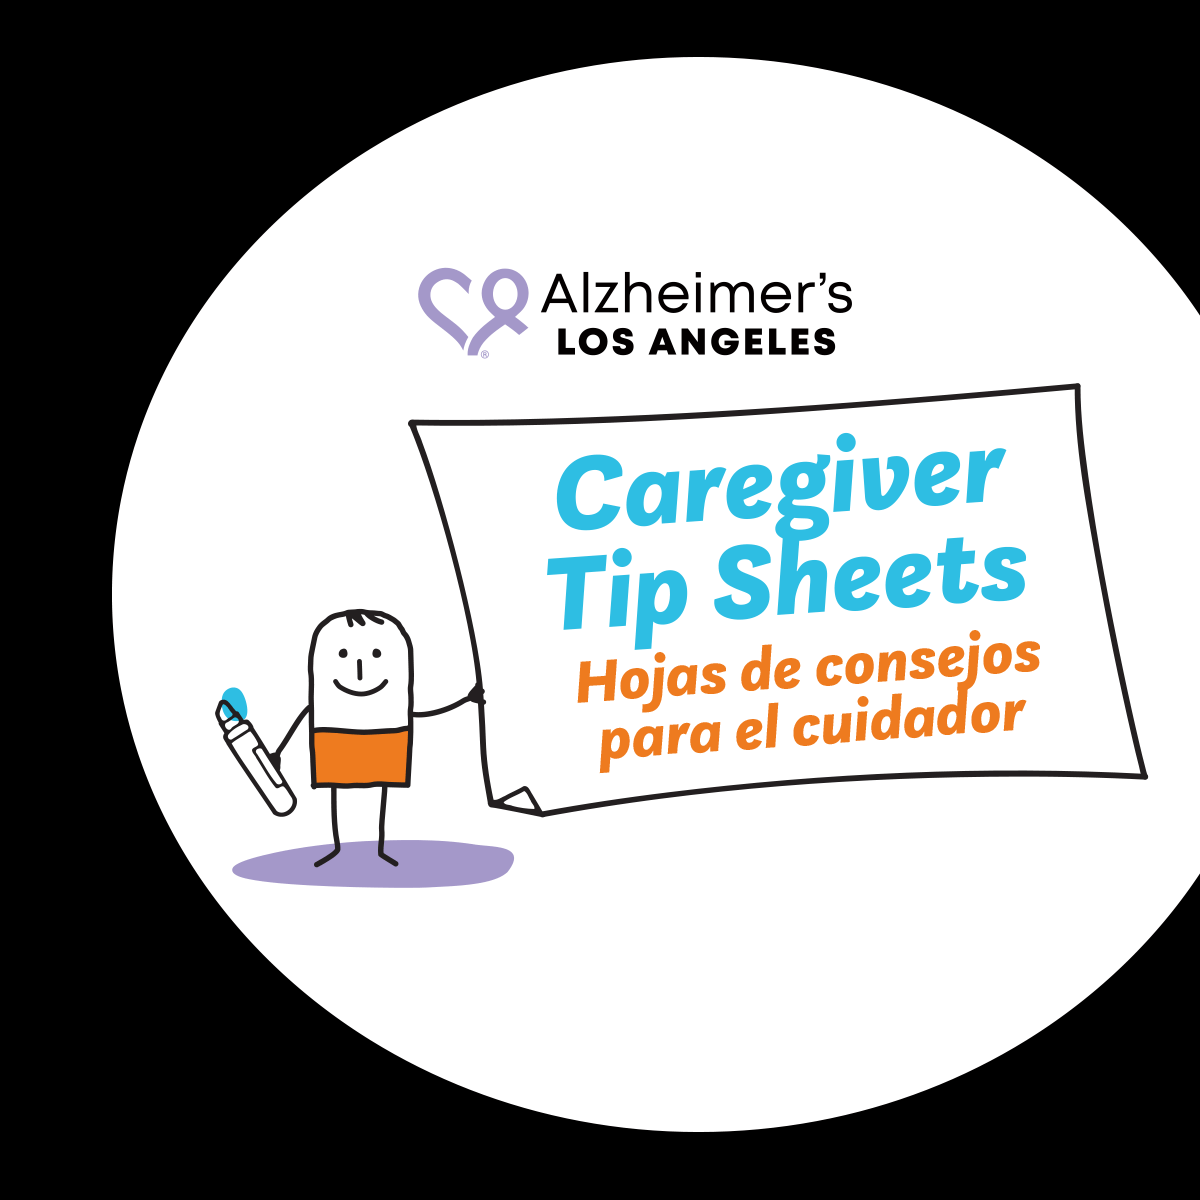 Caregiver Tip Sheets book cover